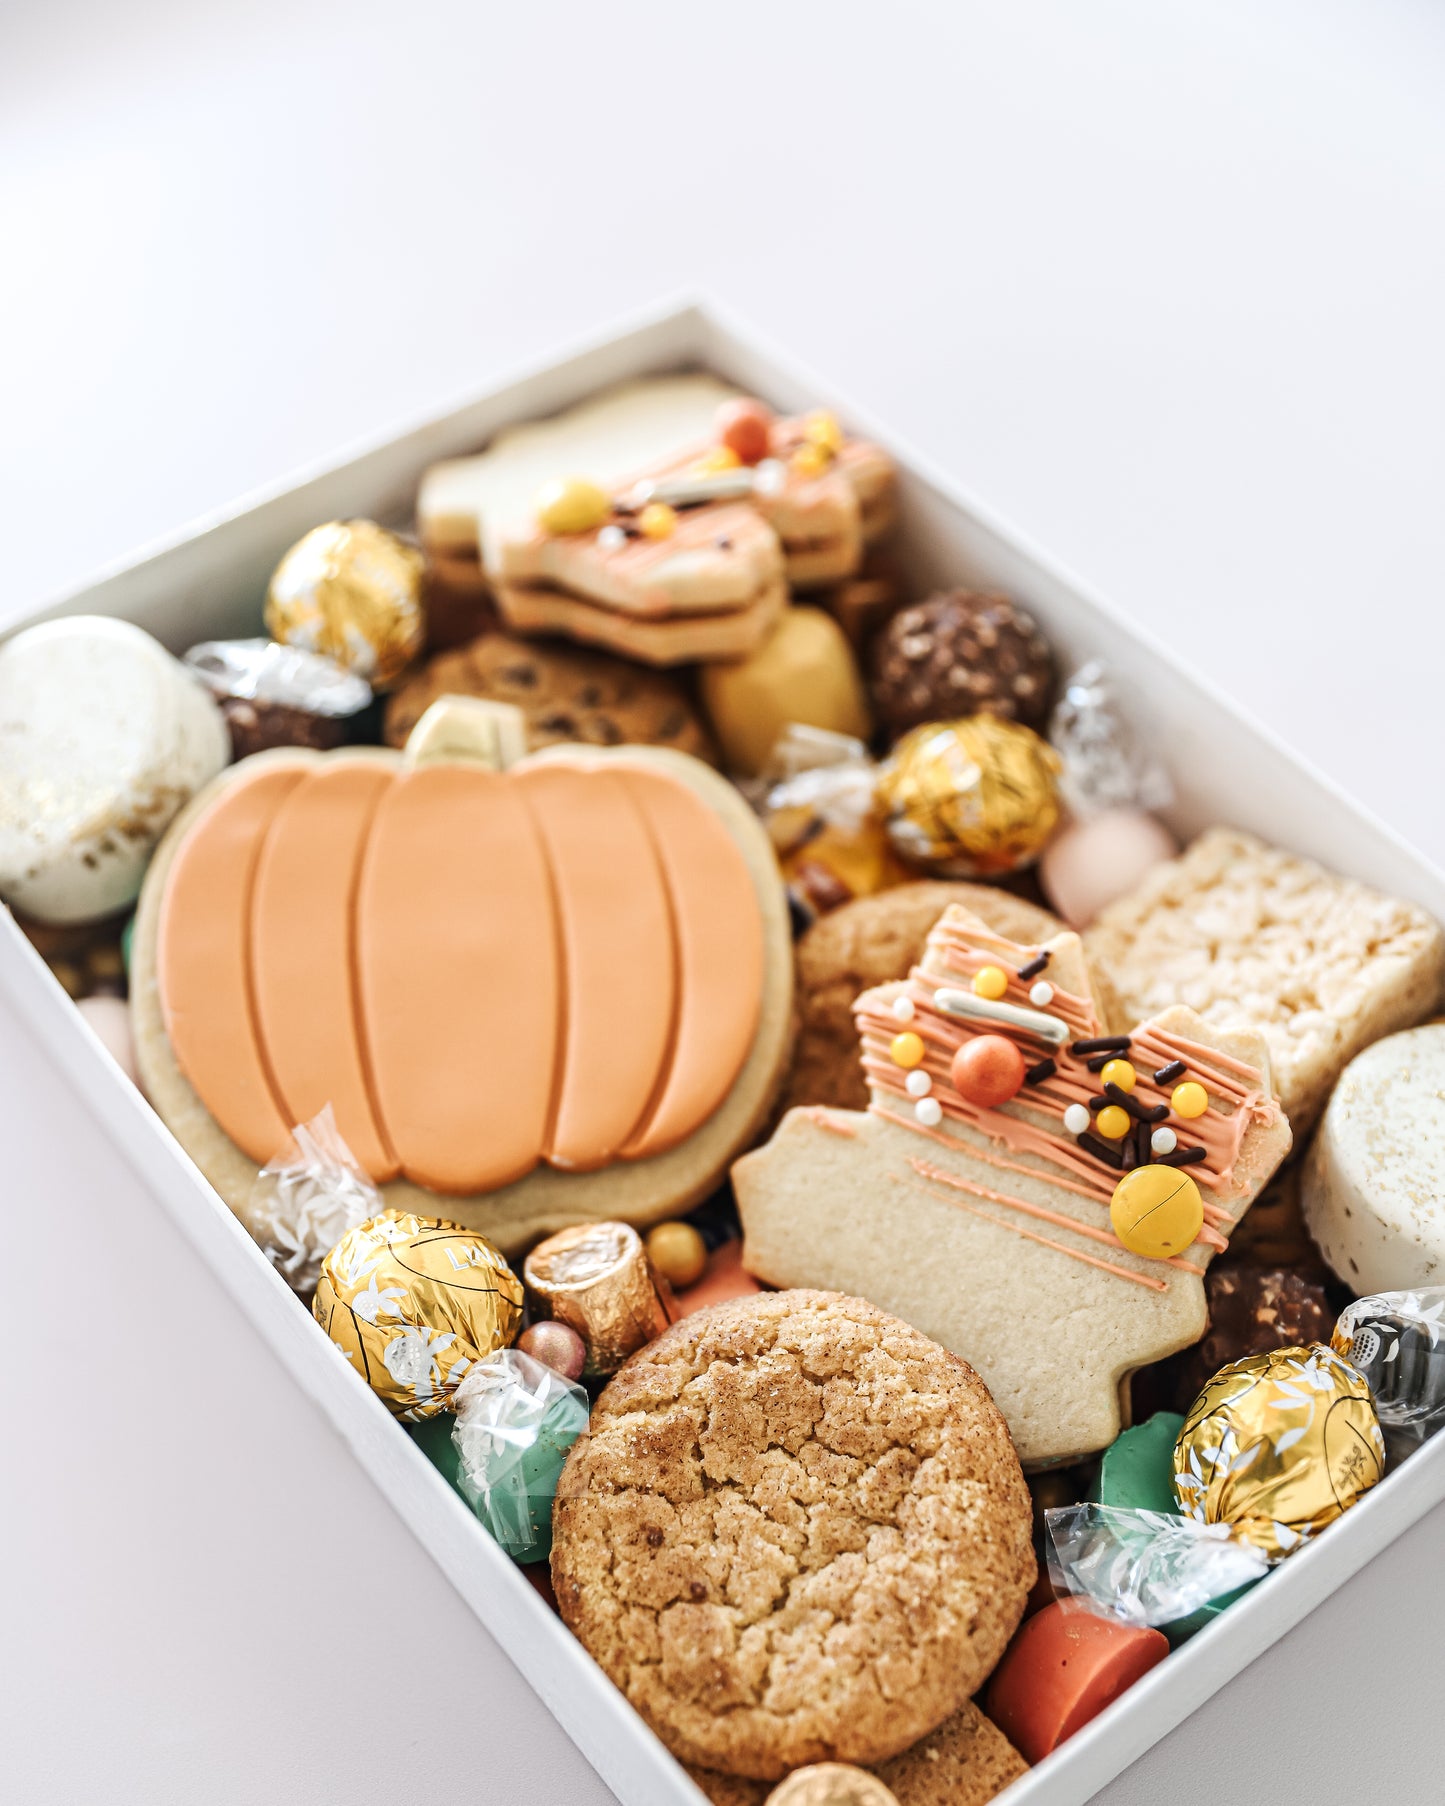 Harvest Delight Premium Confection Box